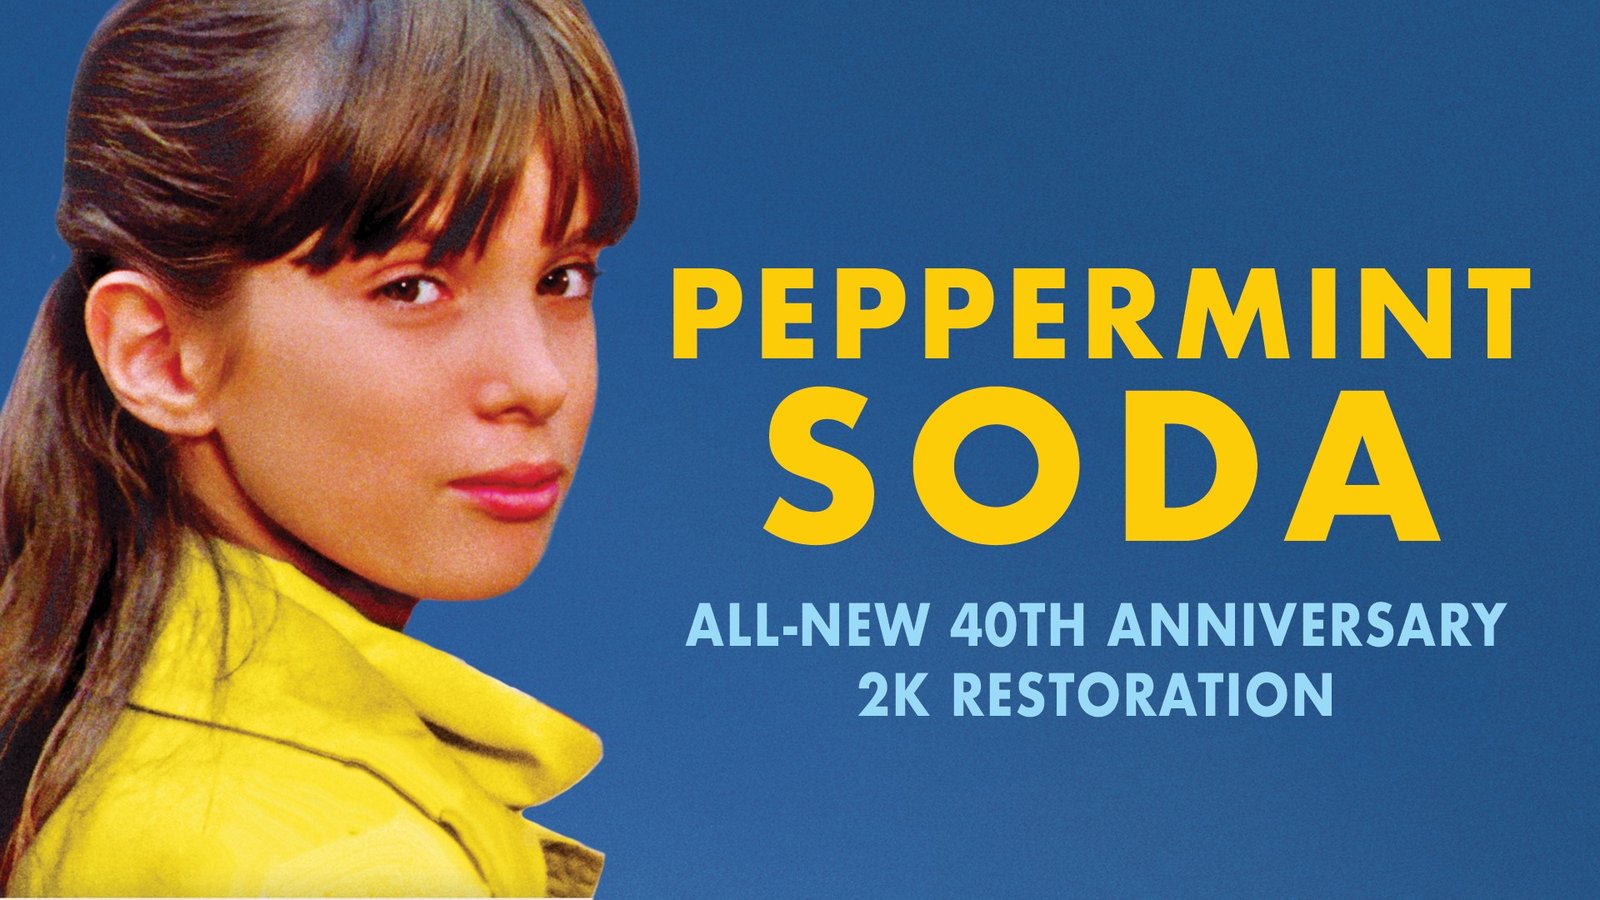 Peppermint Soda - Diabolo menthe